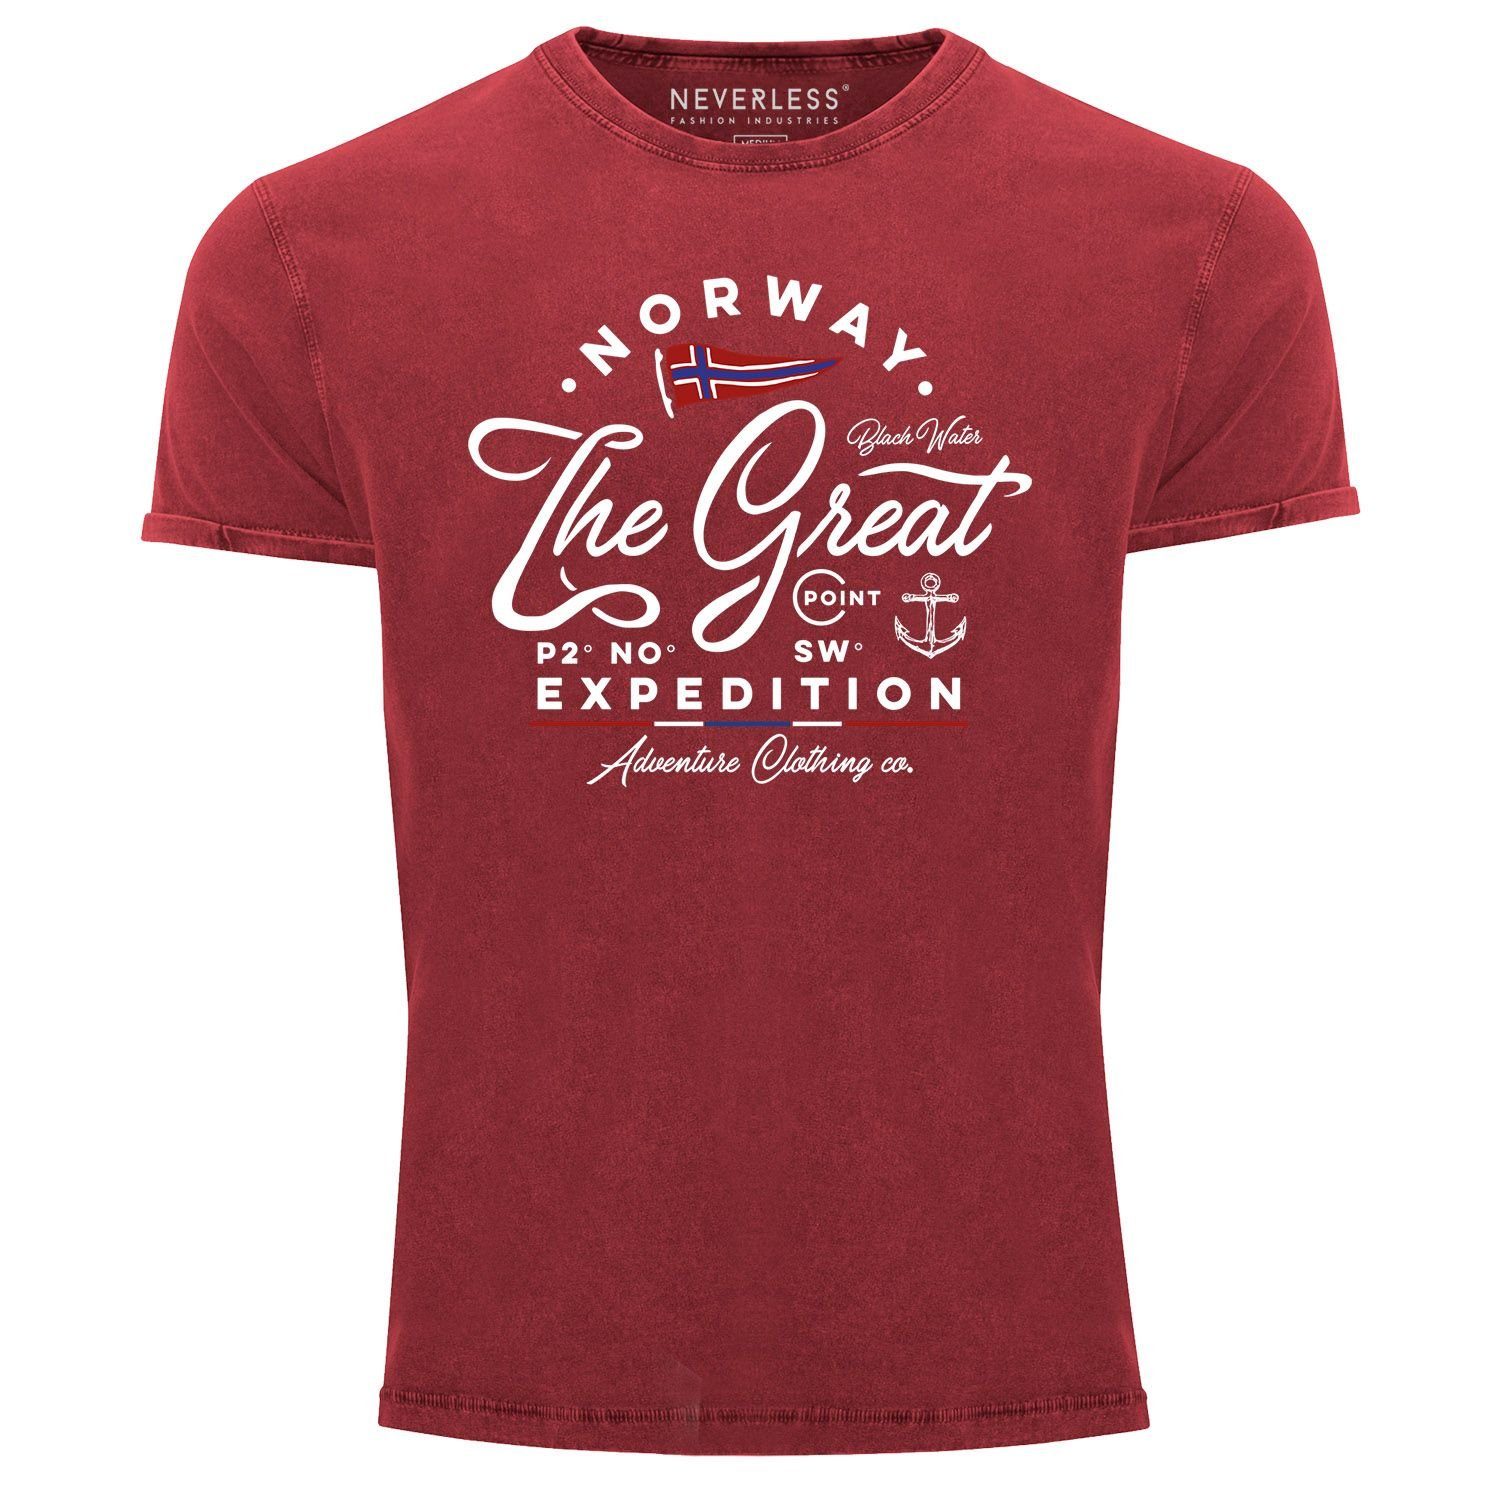 Neverless Print-Shirt Herren Vintage Shirt Norwegen The Great Expedition Outdoor Adventure Printshirt T-Shirt Aufdruck Used Look Neverless® mit Print rot